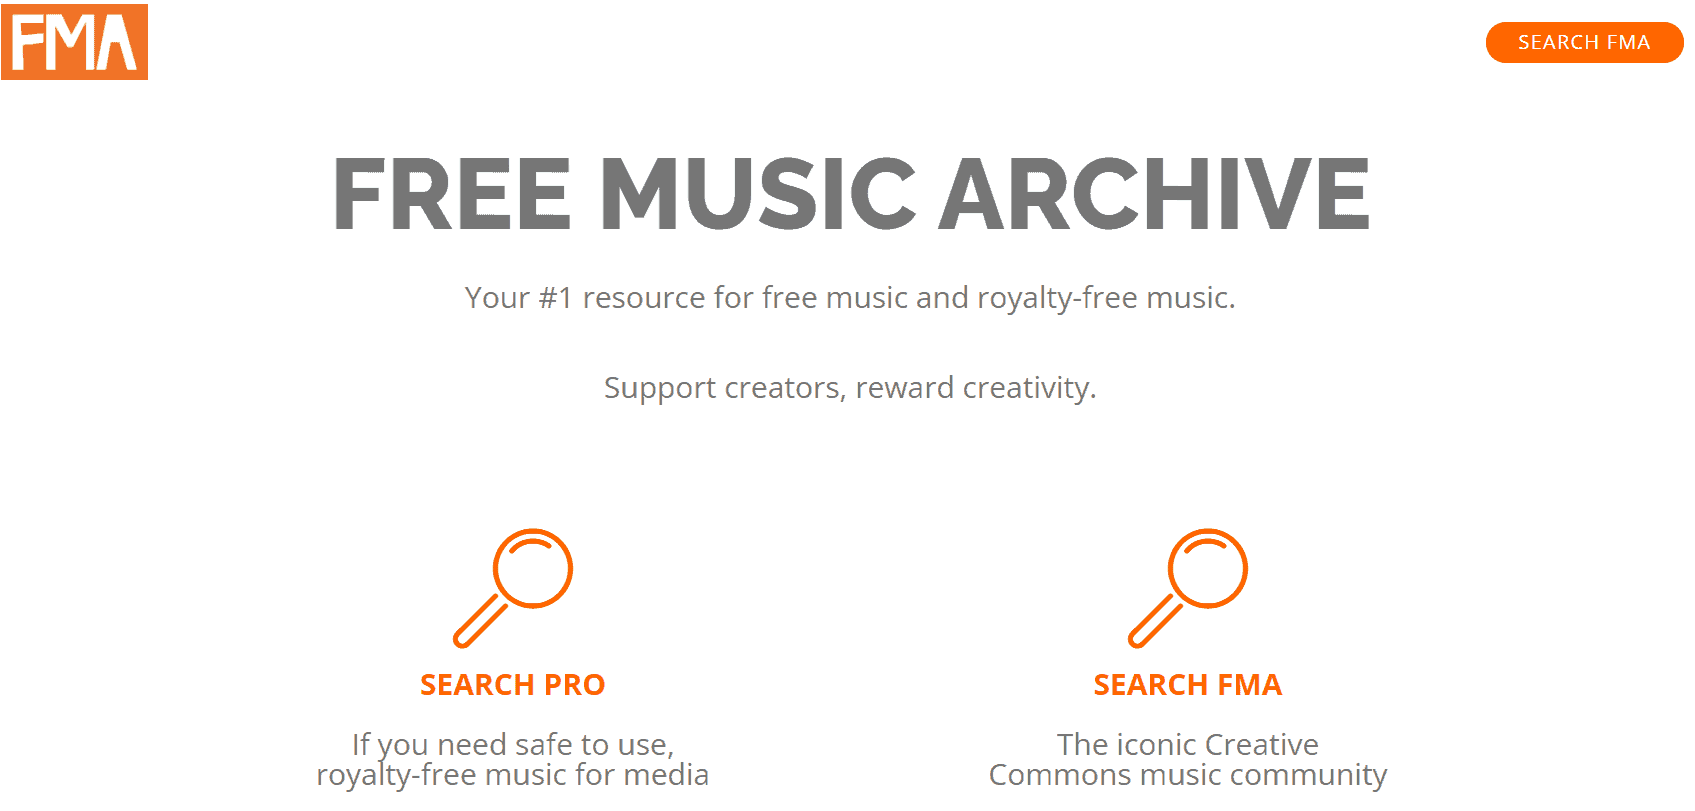 Free Music Archive: FMA